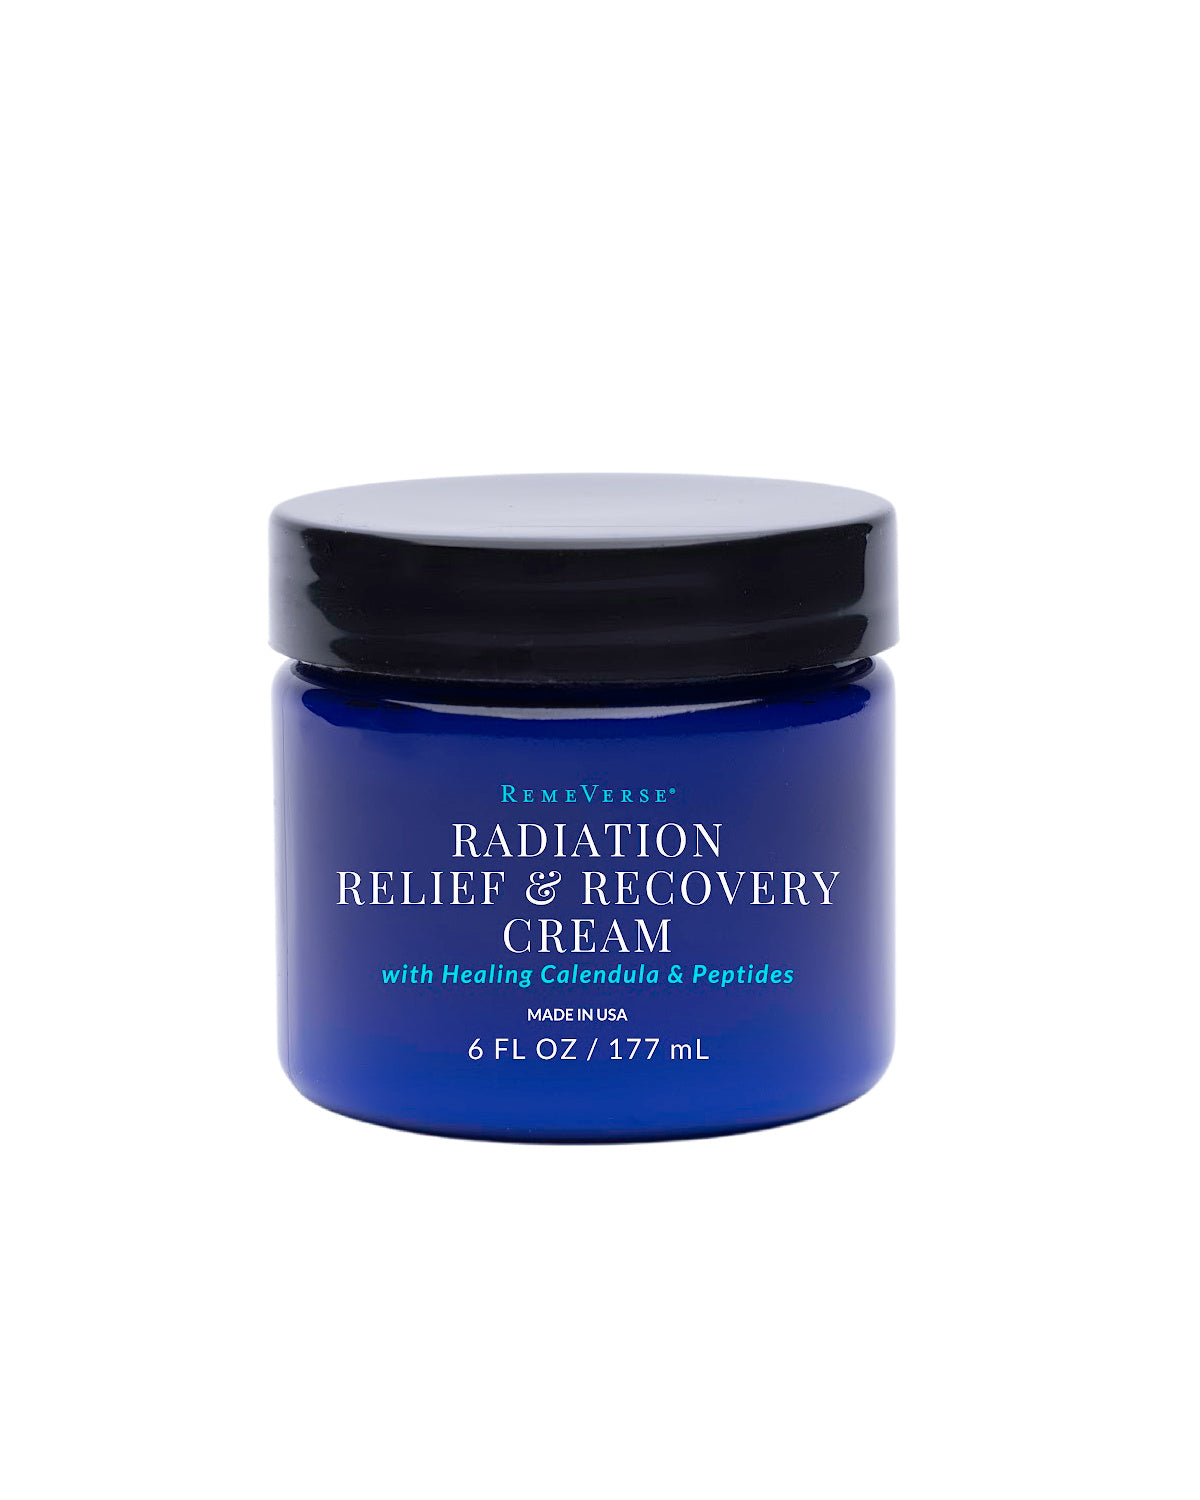 Radiation Relief & Recovery Cream